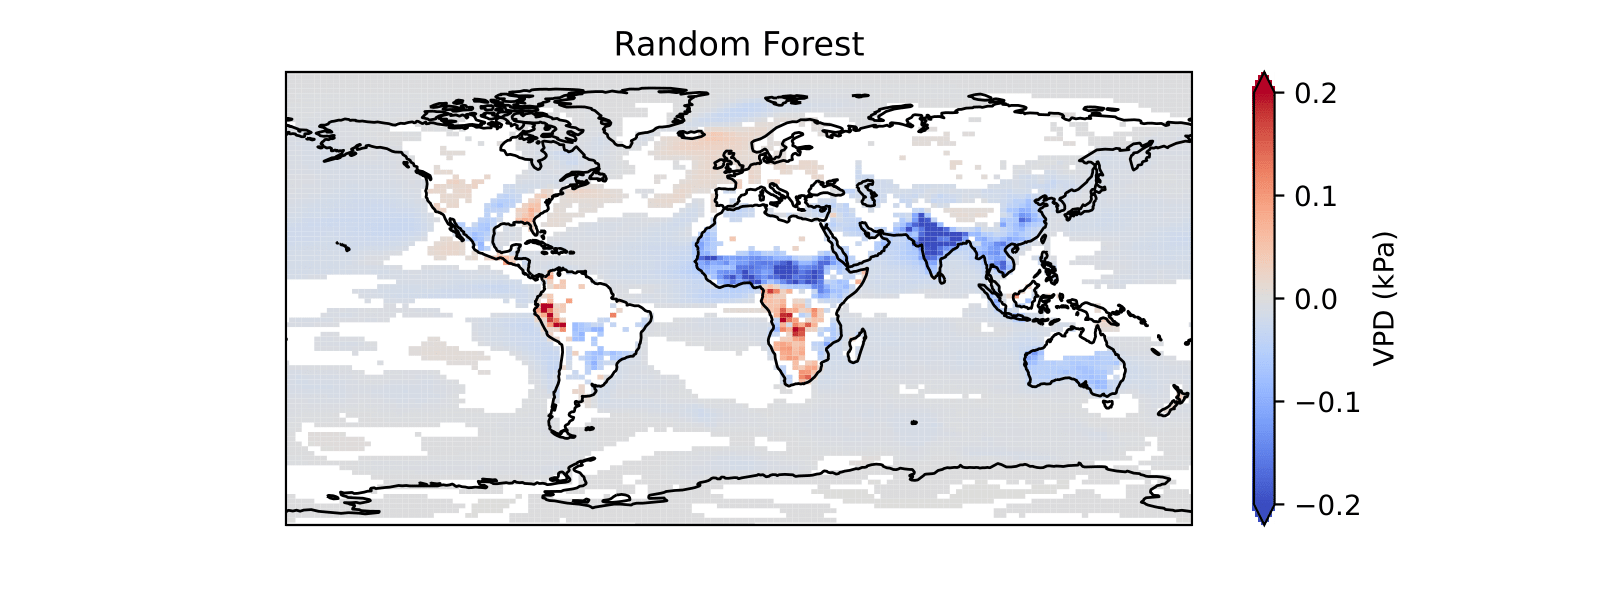 Random Forest Model Predictions